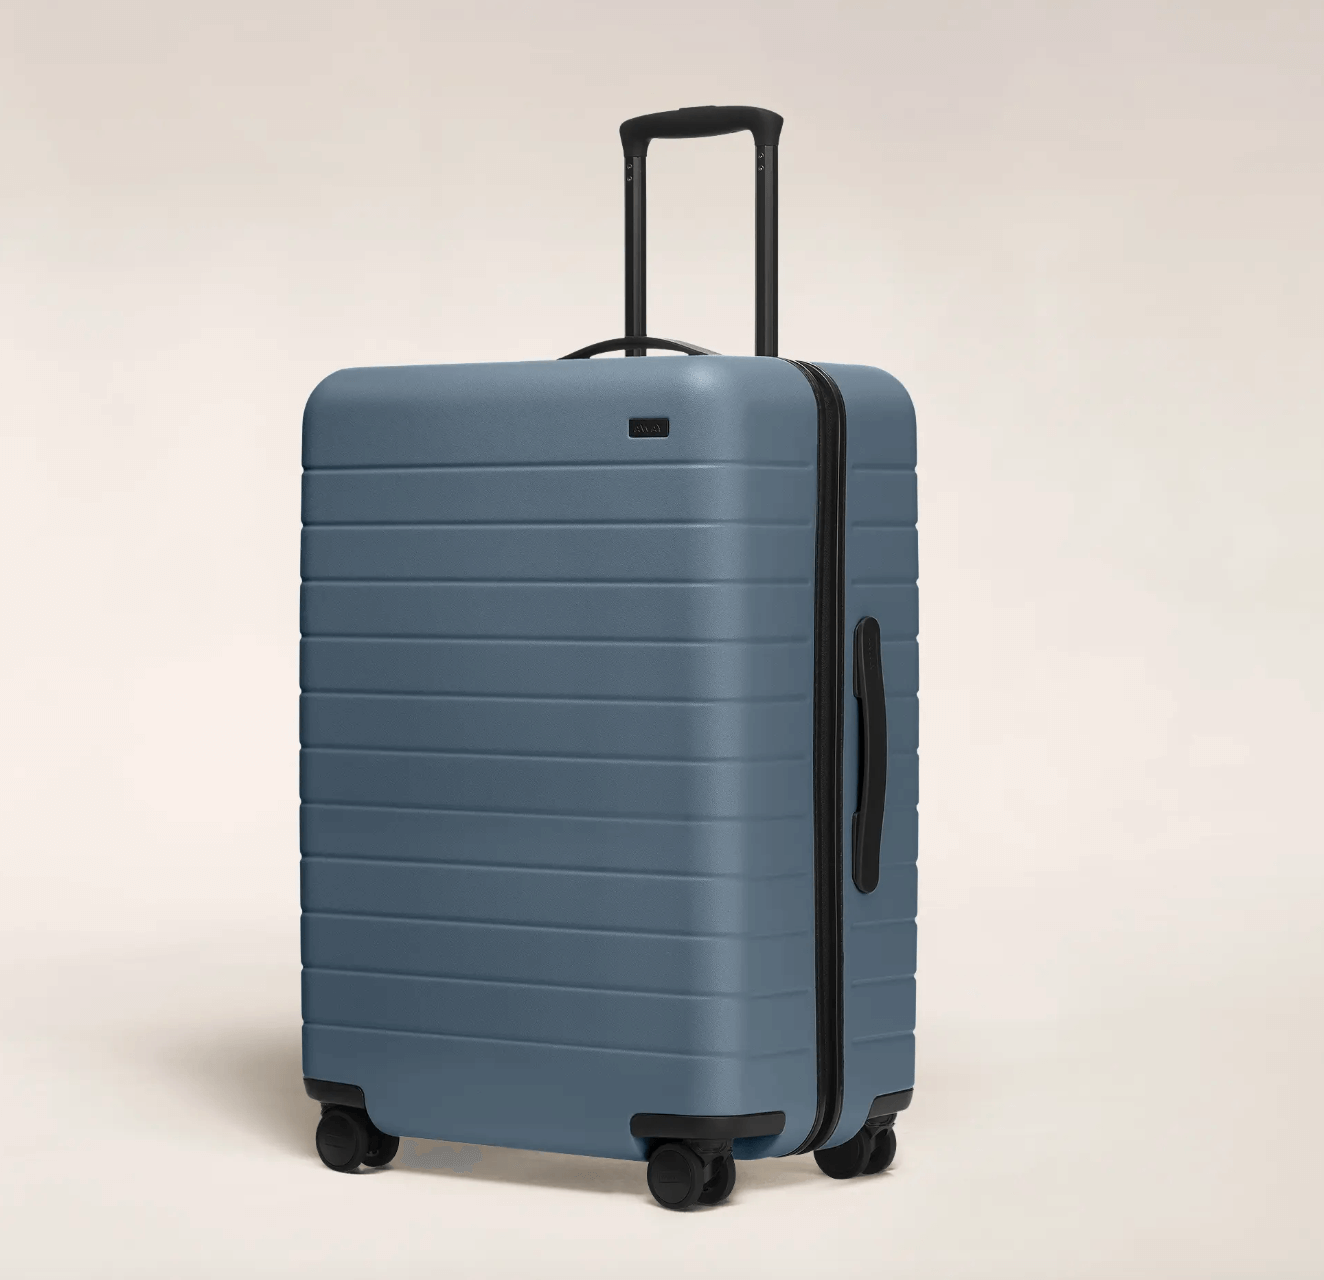 away medium checked luggage coast blue luggage hardside black zipper black handle black wheels